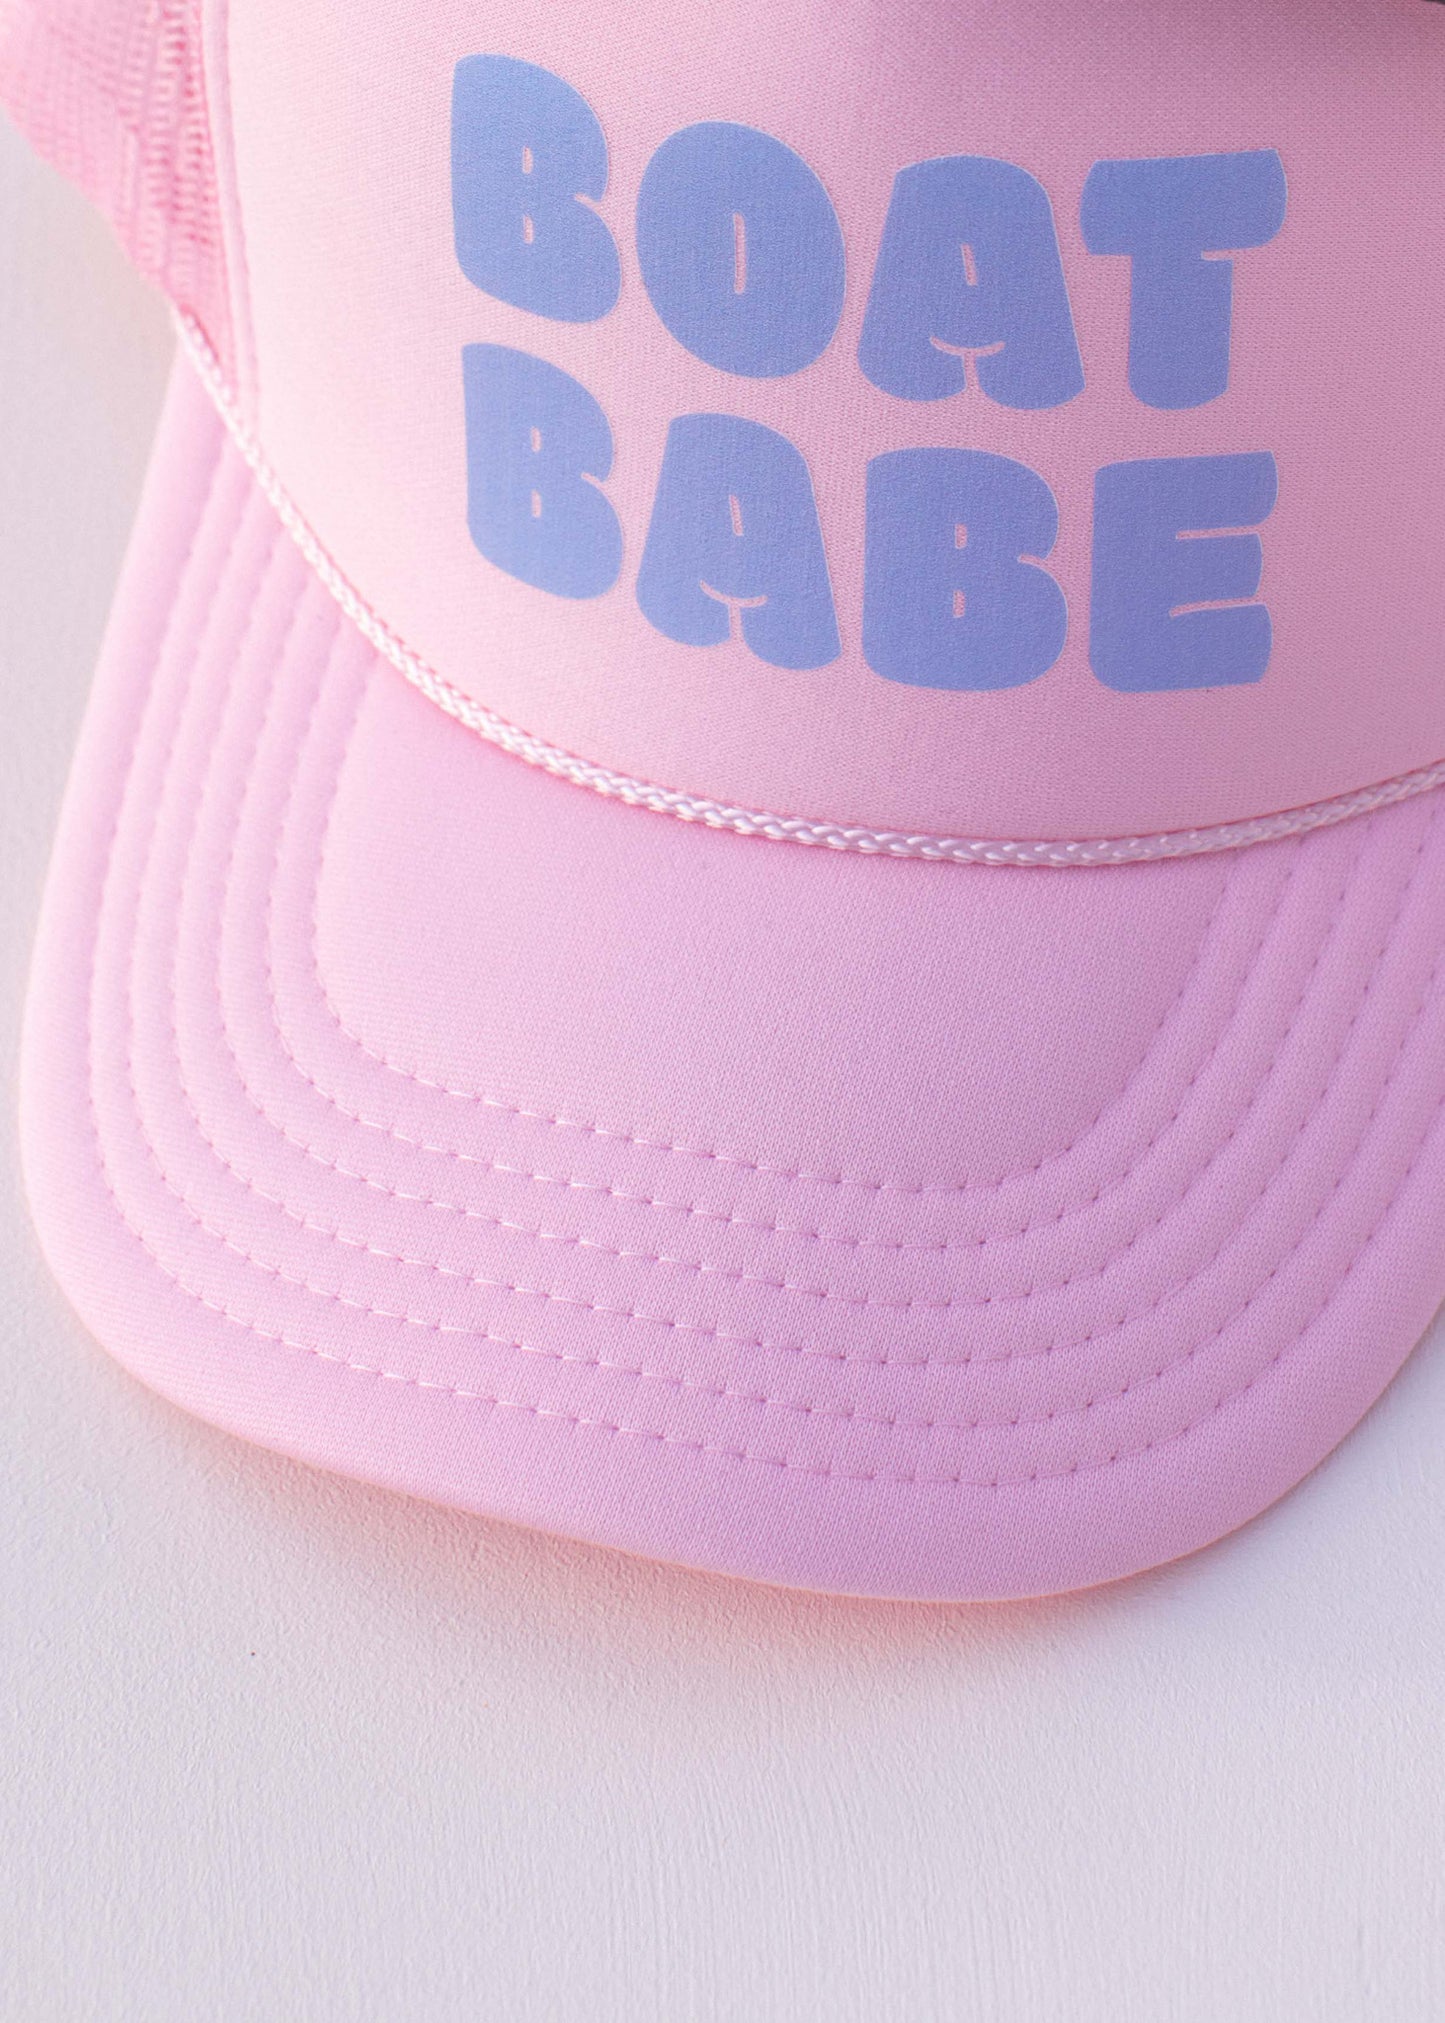 Boat Babe Trucker Hat - Pink